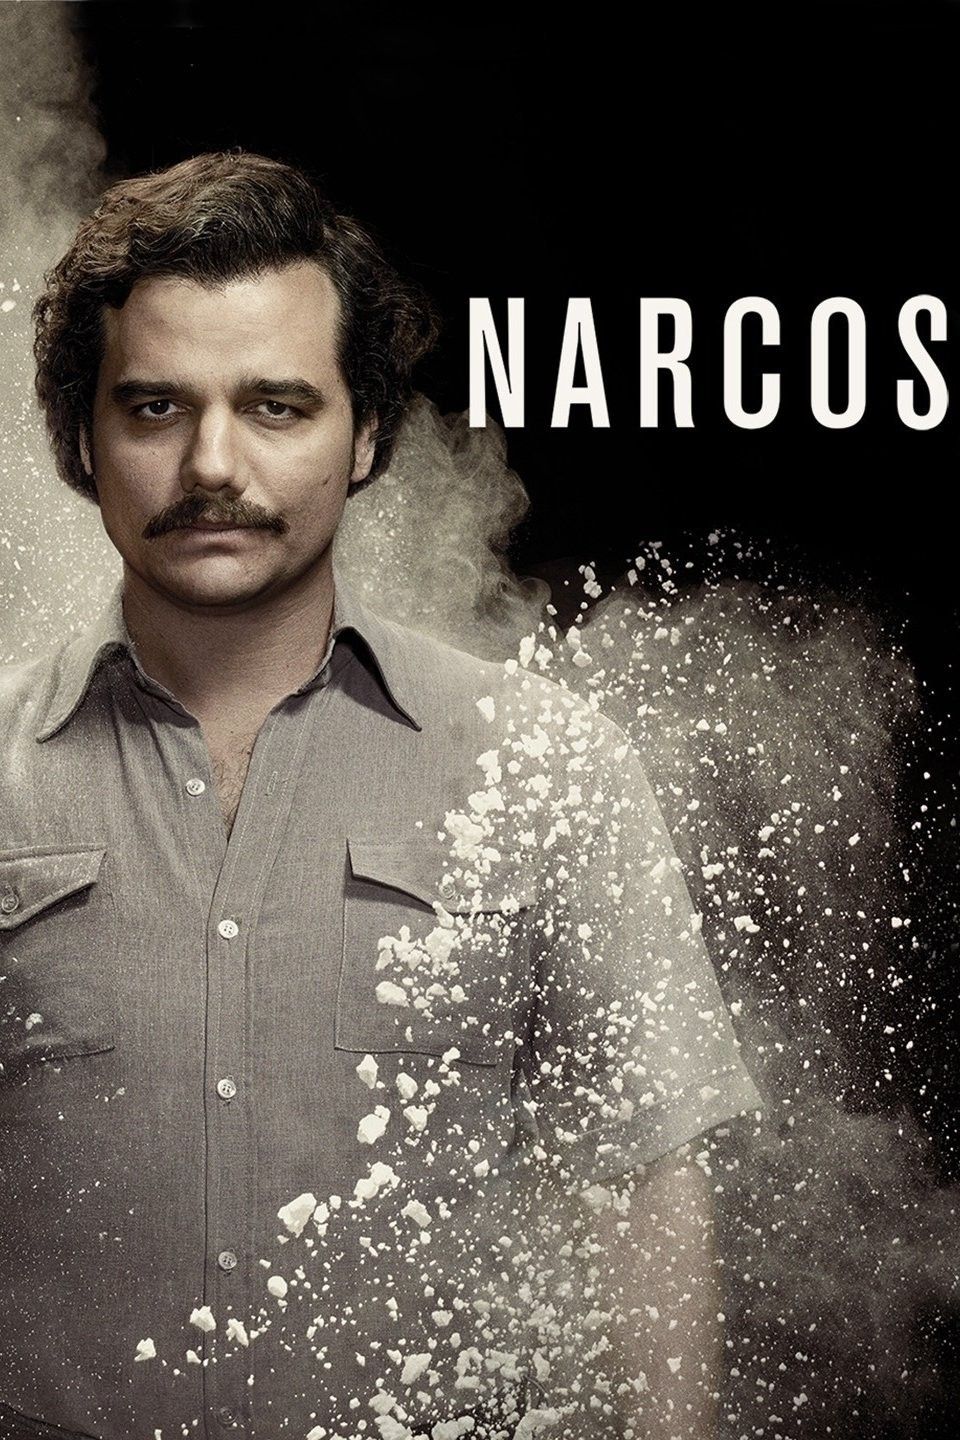 Narcos poster